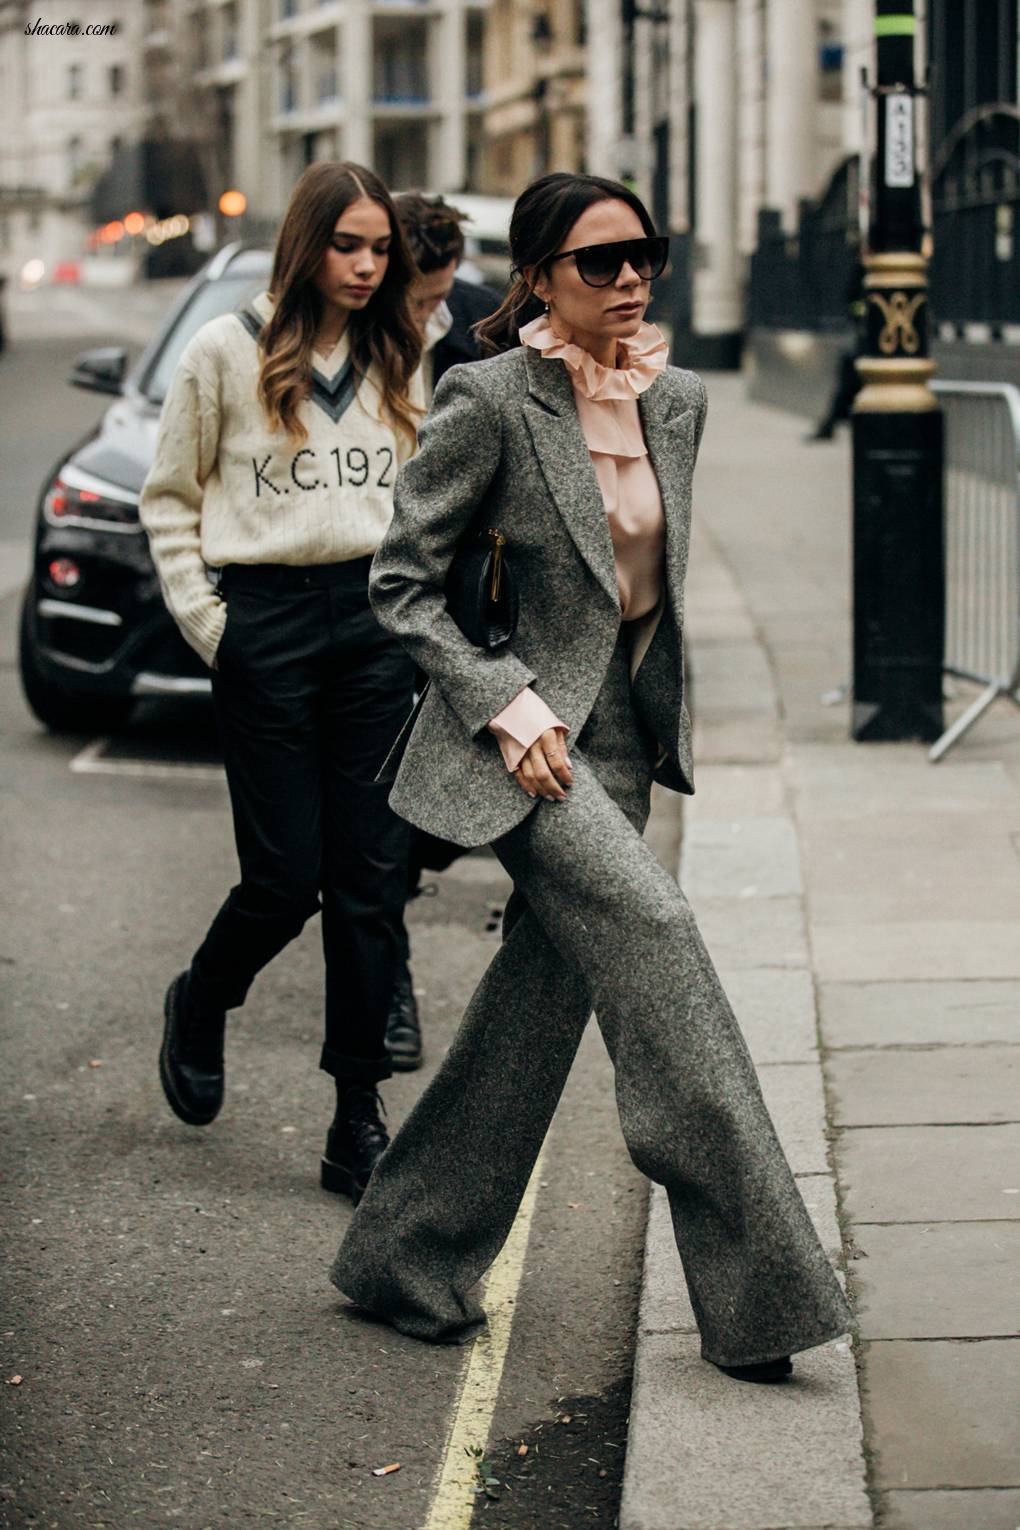 London Fashion Week Men's Street Style 2019